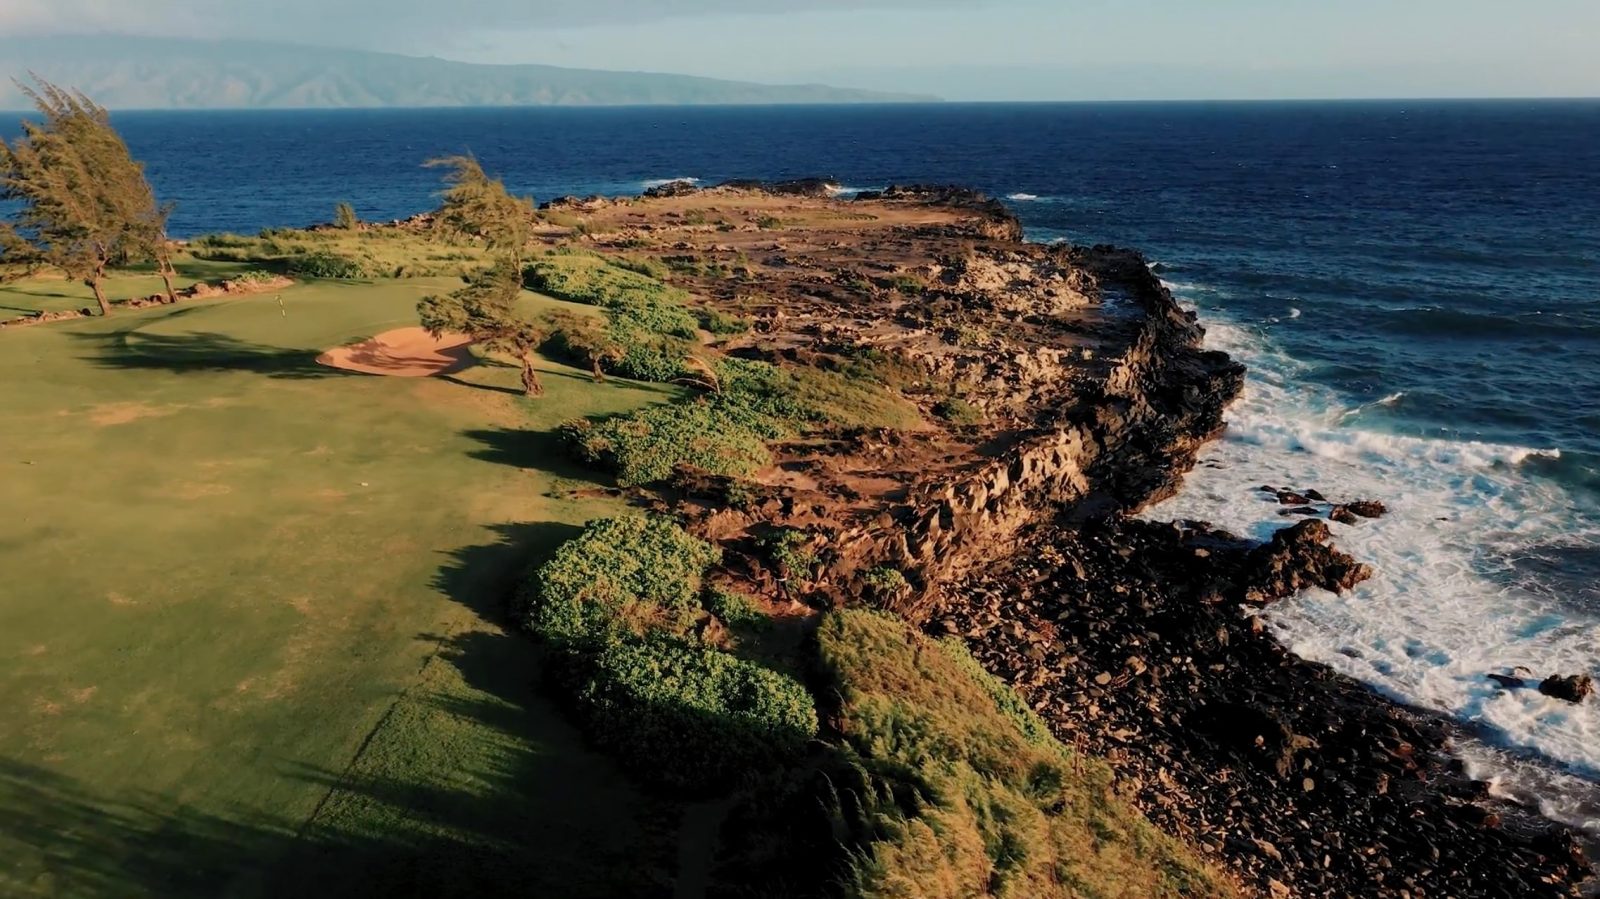 DroneRise - Maui Hawaii through the lens of the DJI Mavic 2 Pro